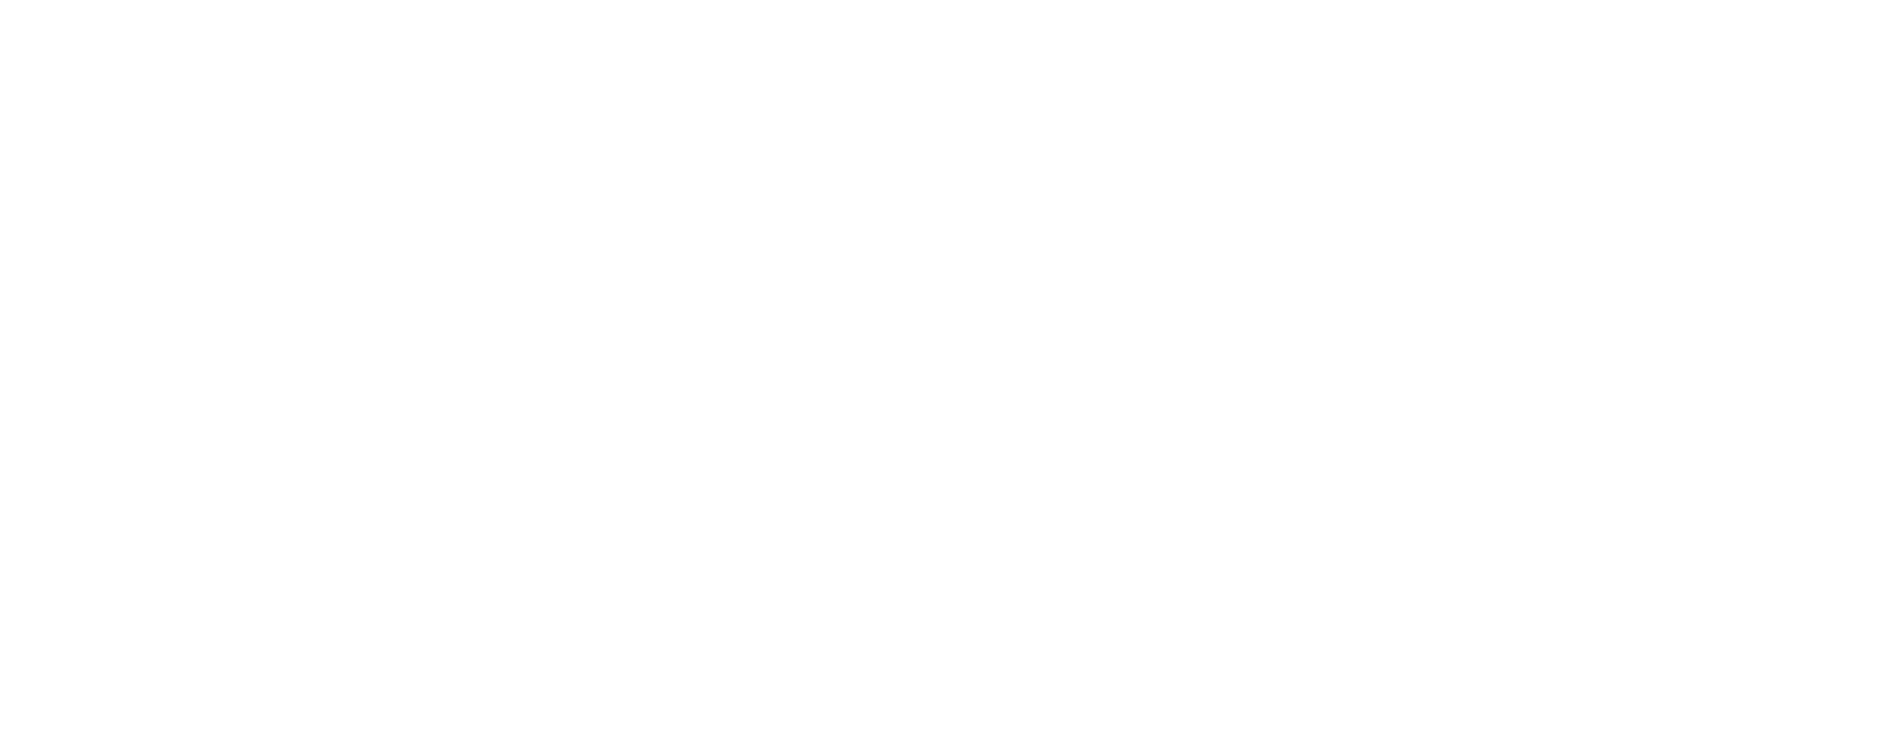 Digital Present